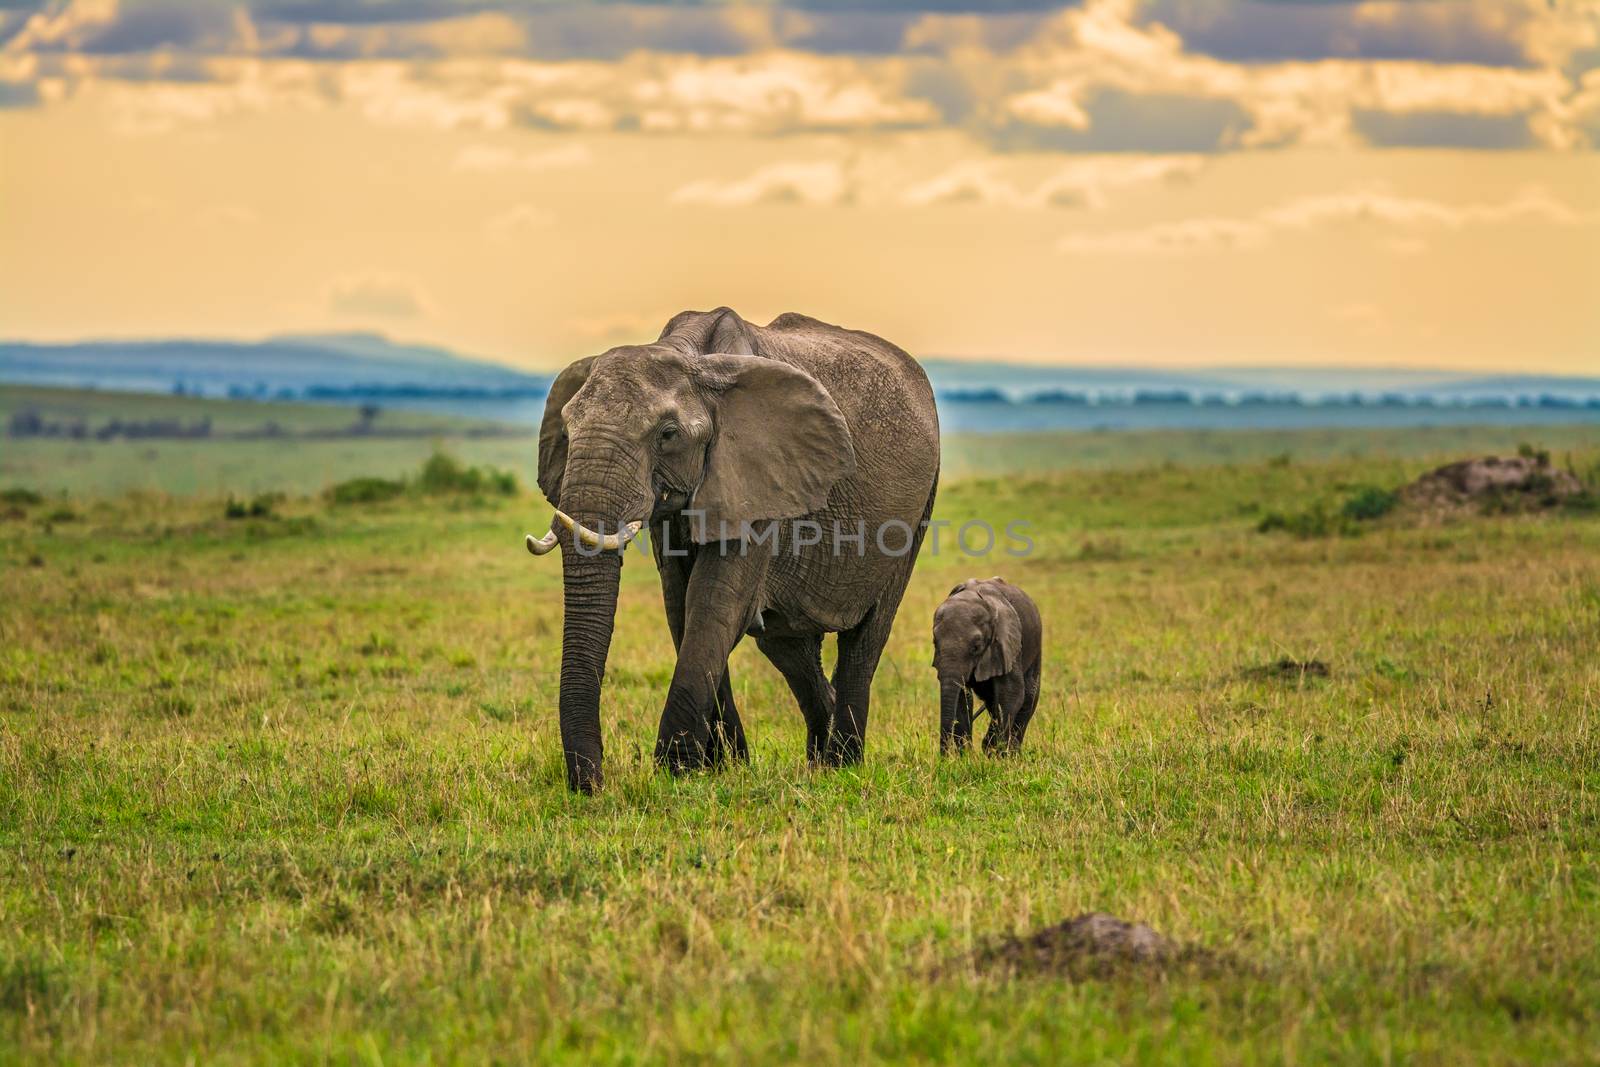 Mother elephant with a baby, Maasai Mara National Reserve, Kenya.